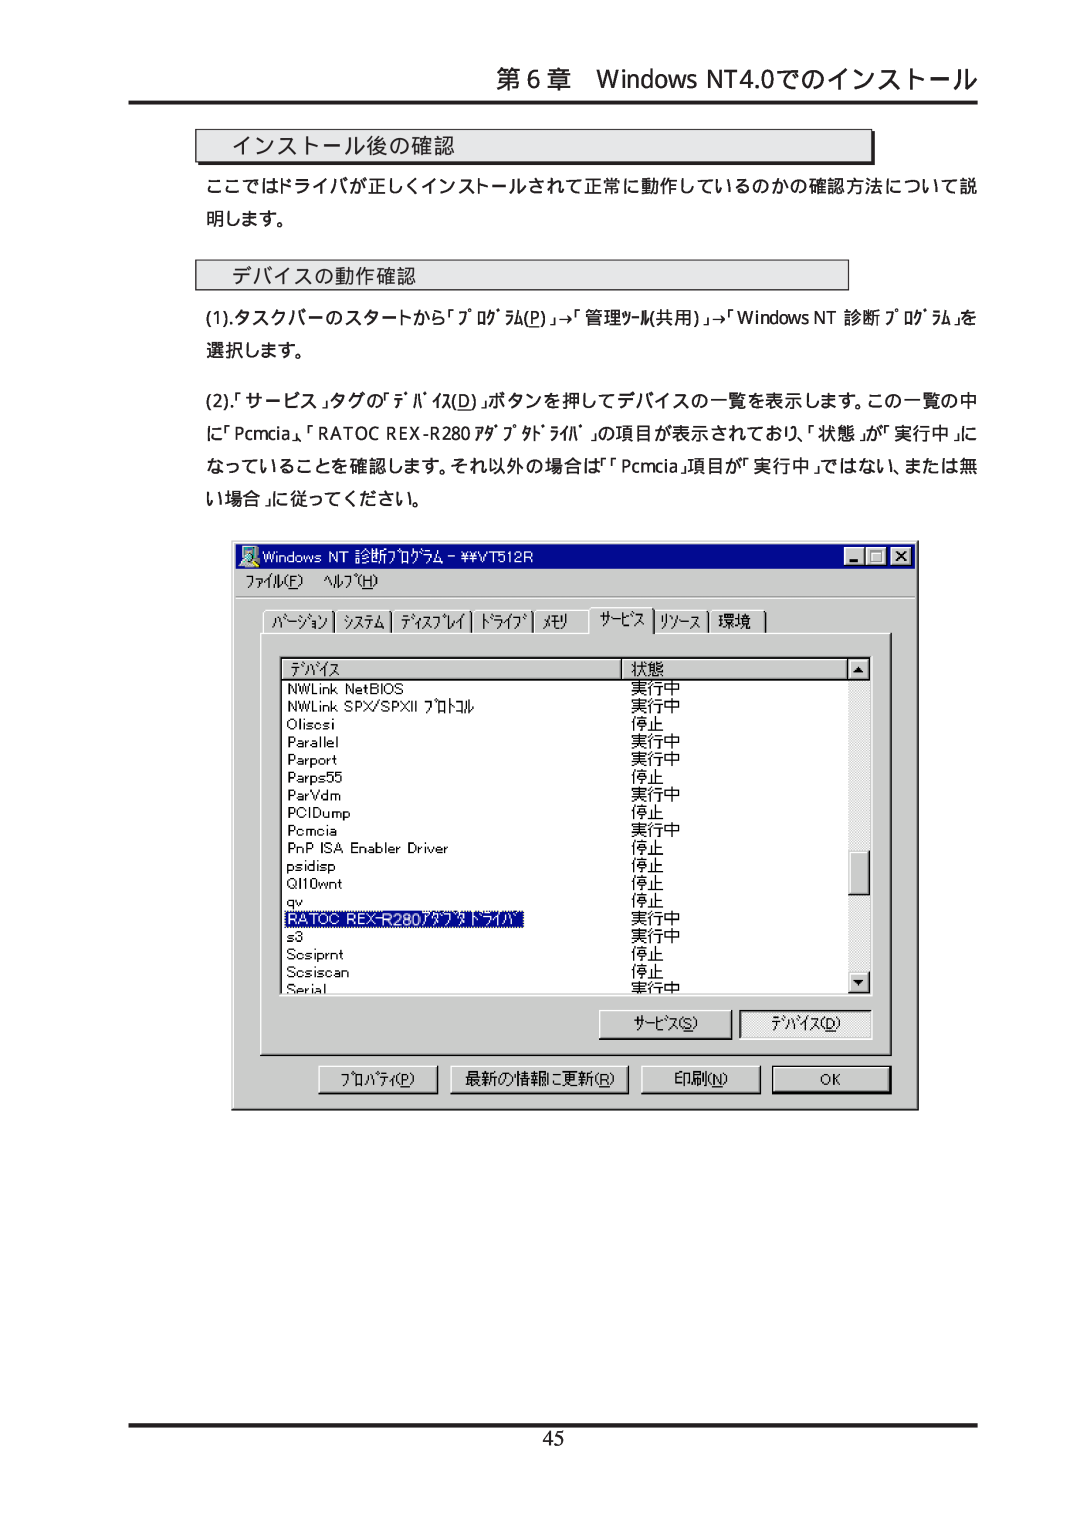 Ratoc Systems REX-R280 manual 第６章 Windows NT4.0でのインストール, インストール後の確認, デバイスの動作確認 